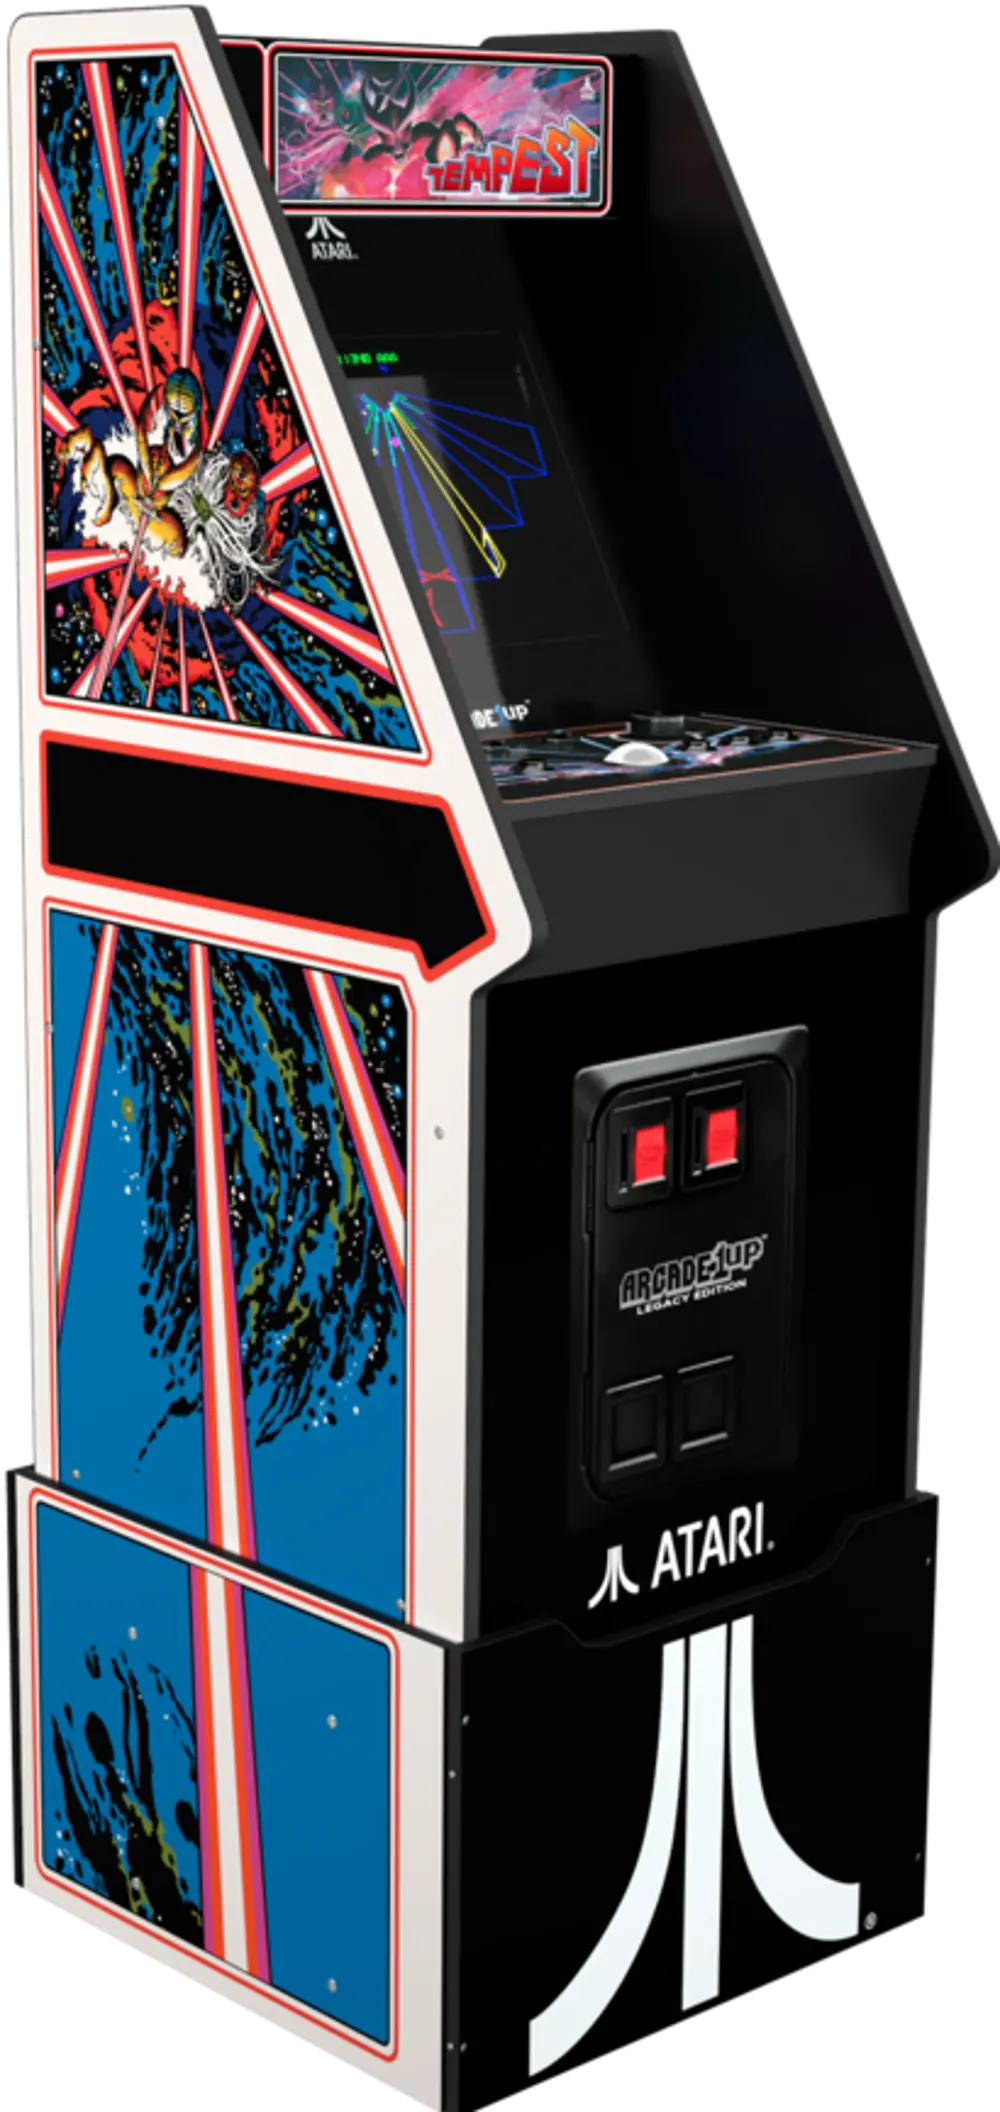 ARCADE1UP/ATARI,LGCY Arcade 1Up Atari Legacy Edition Arcade Machine-1